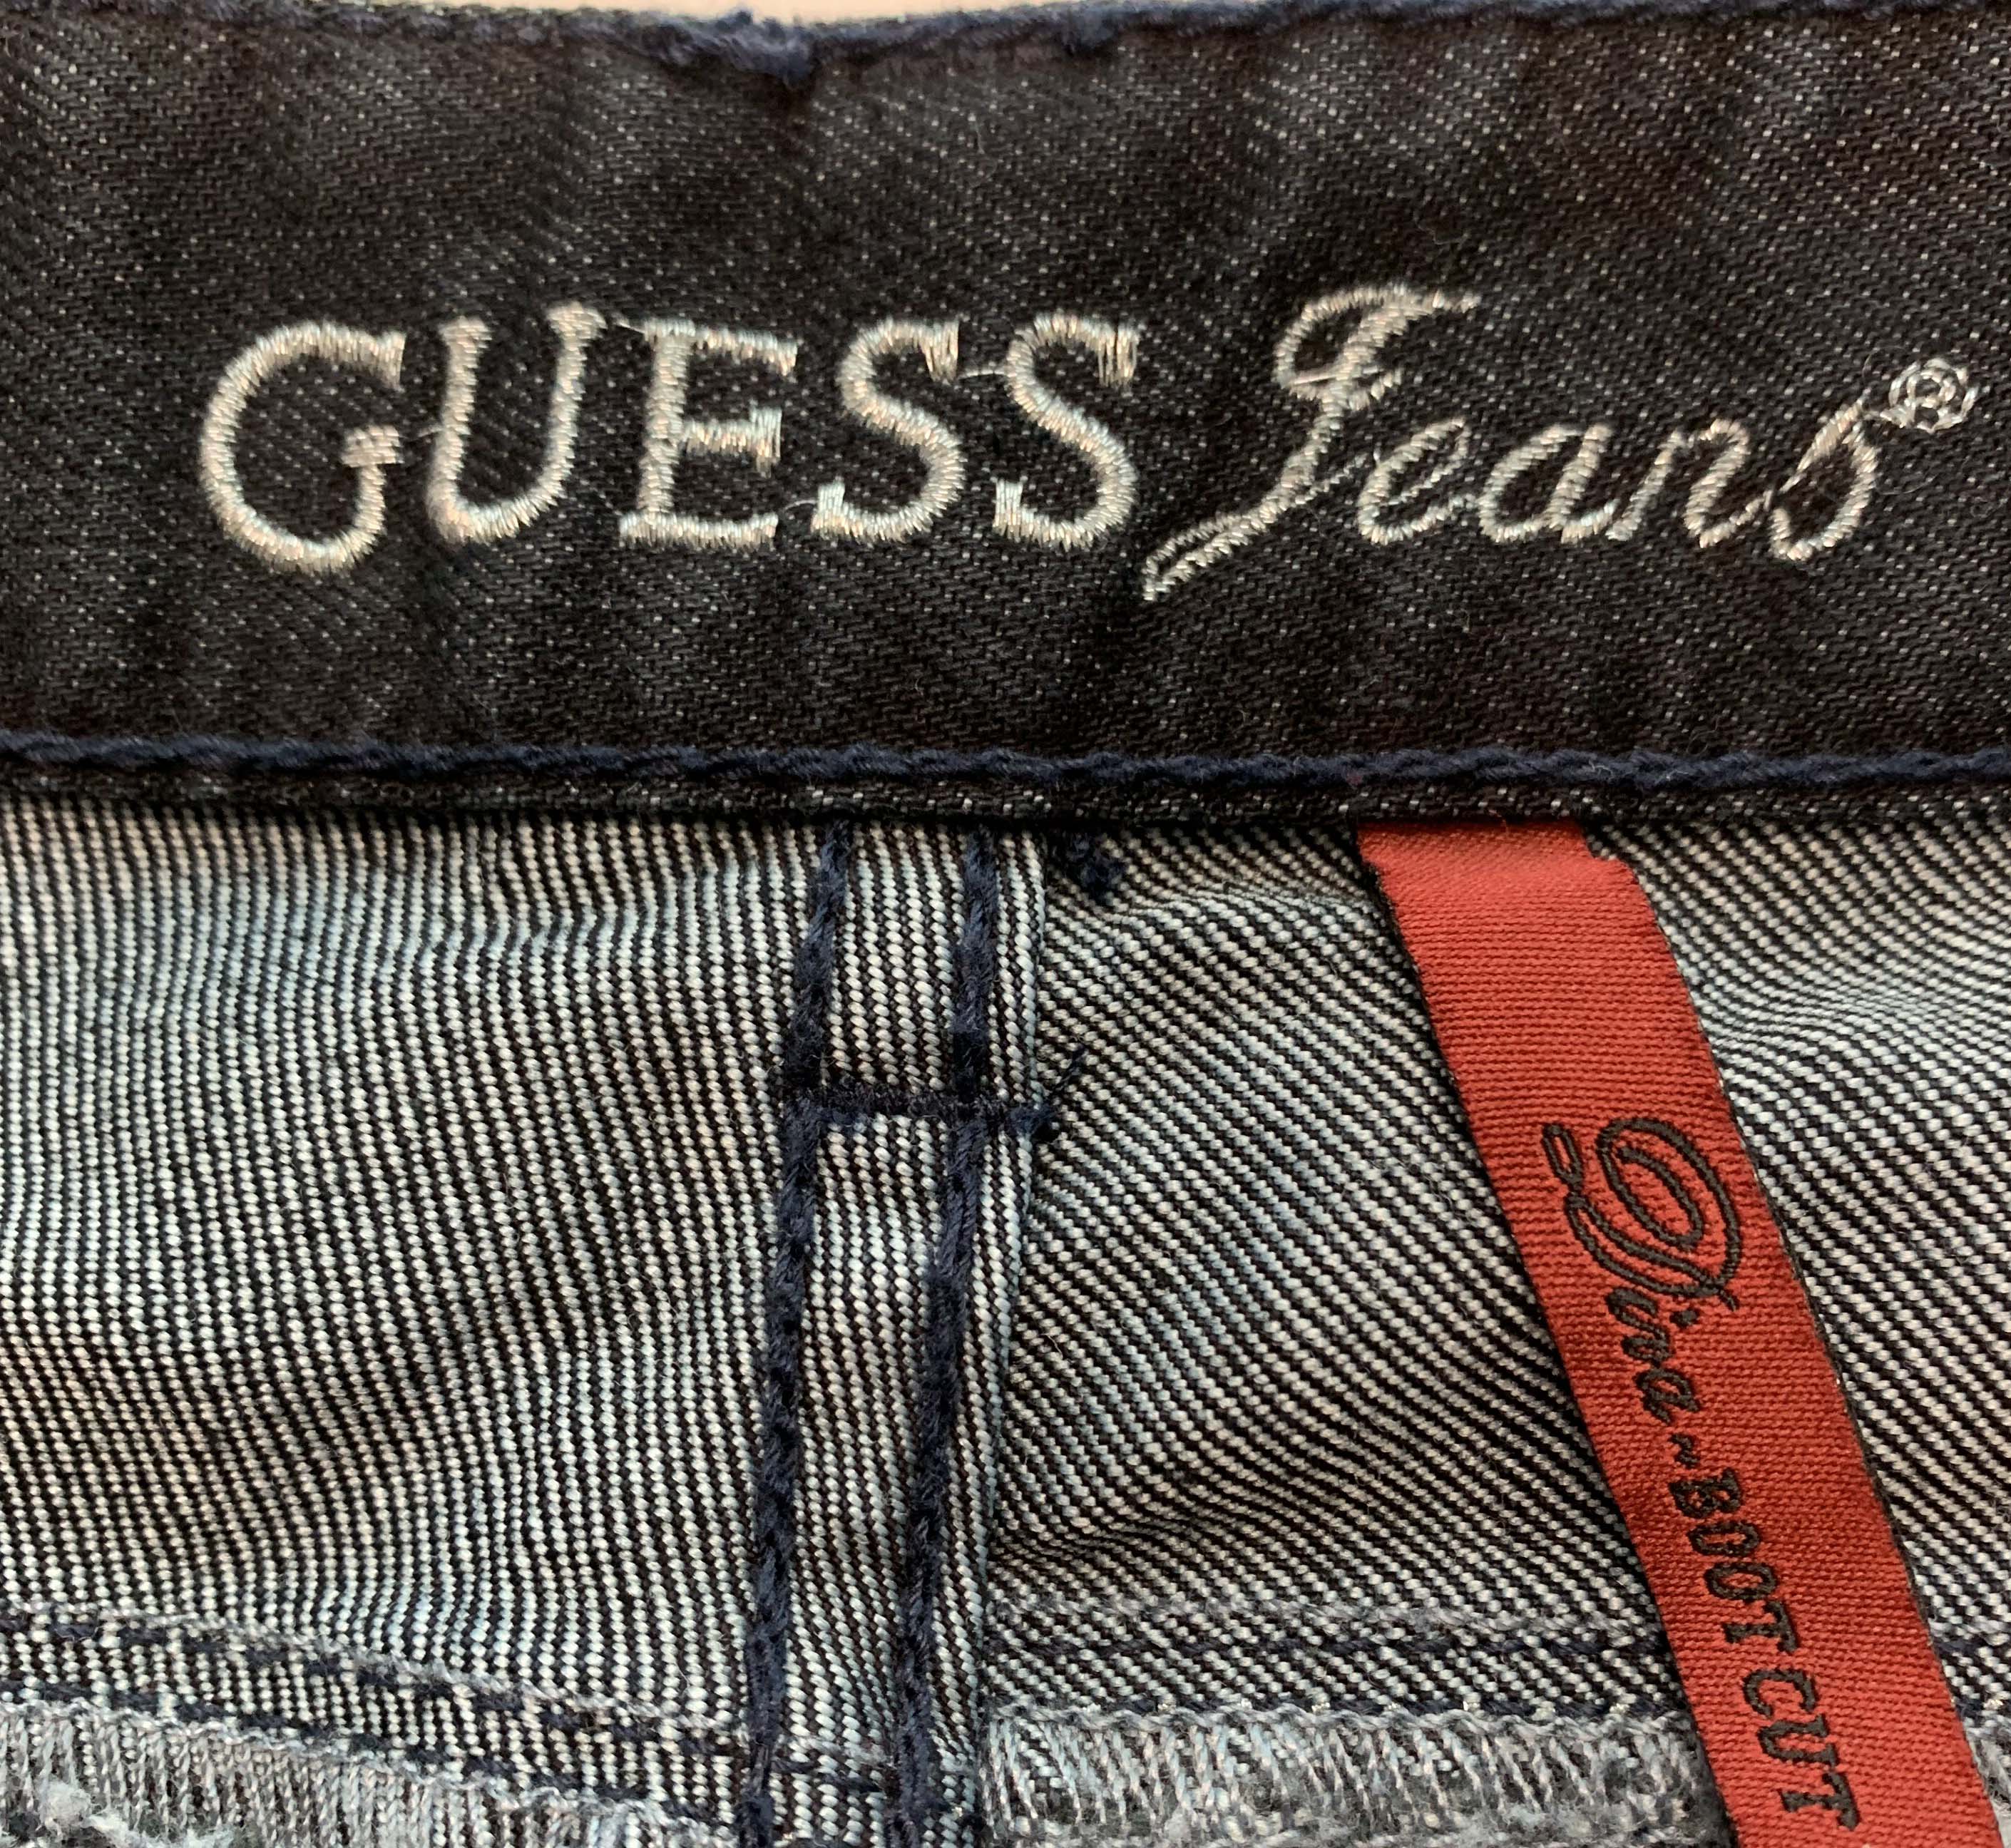 GUESS Denim Jeans